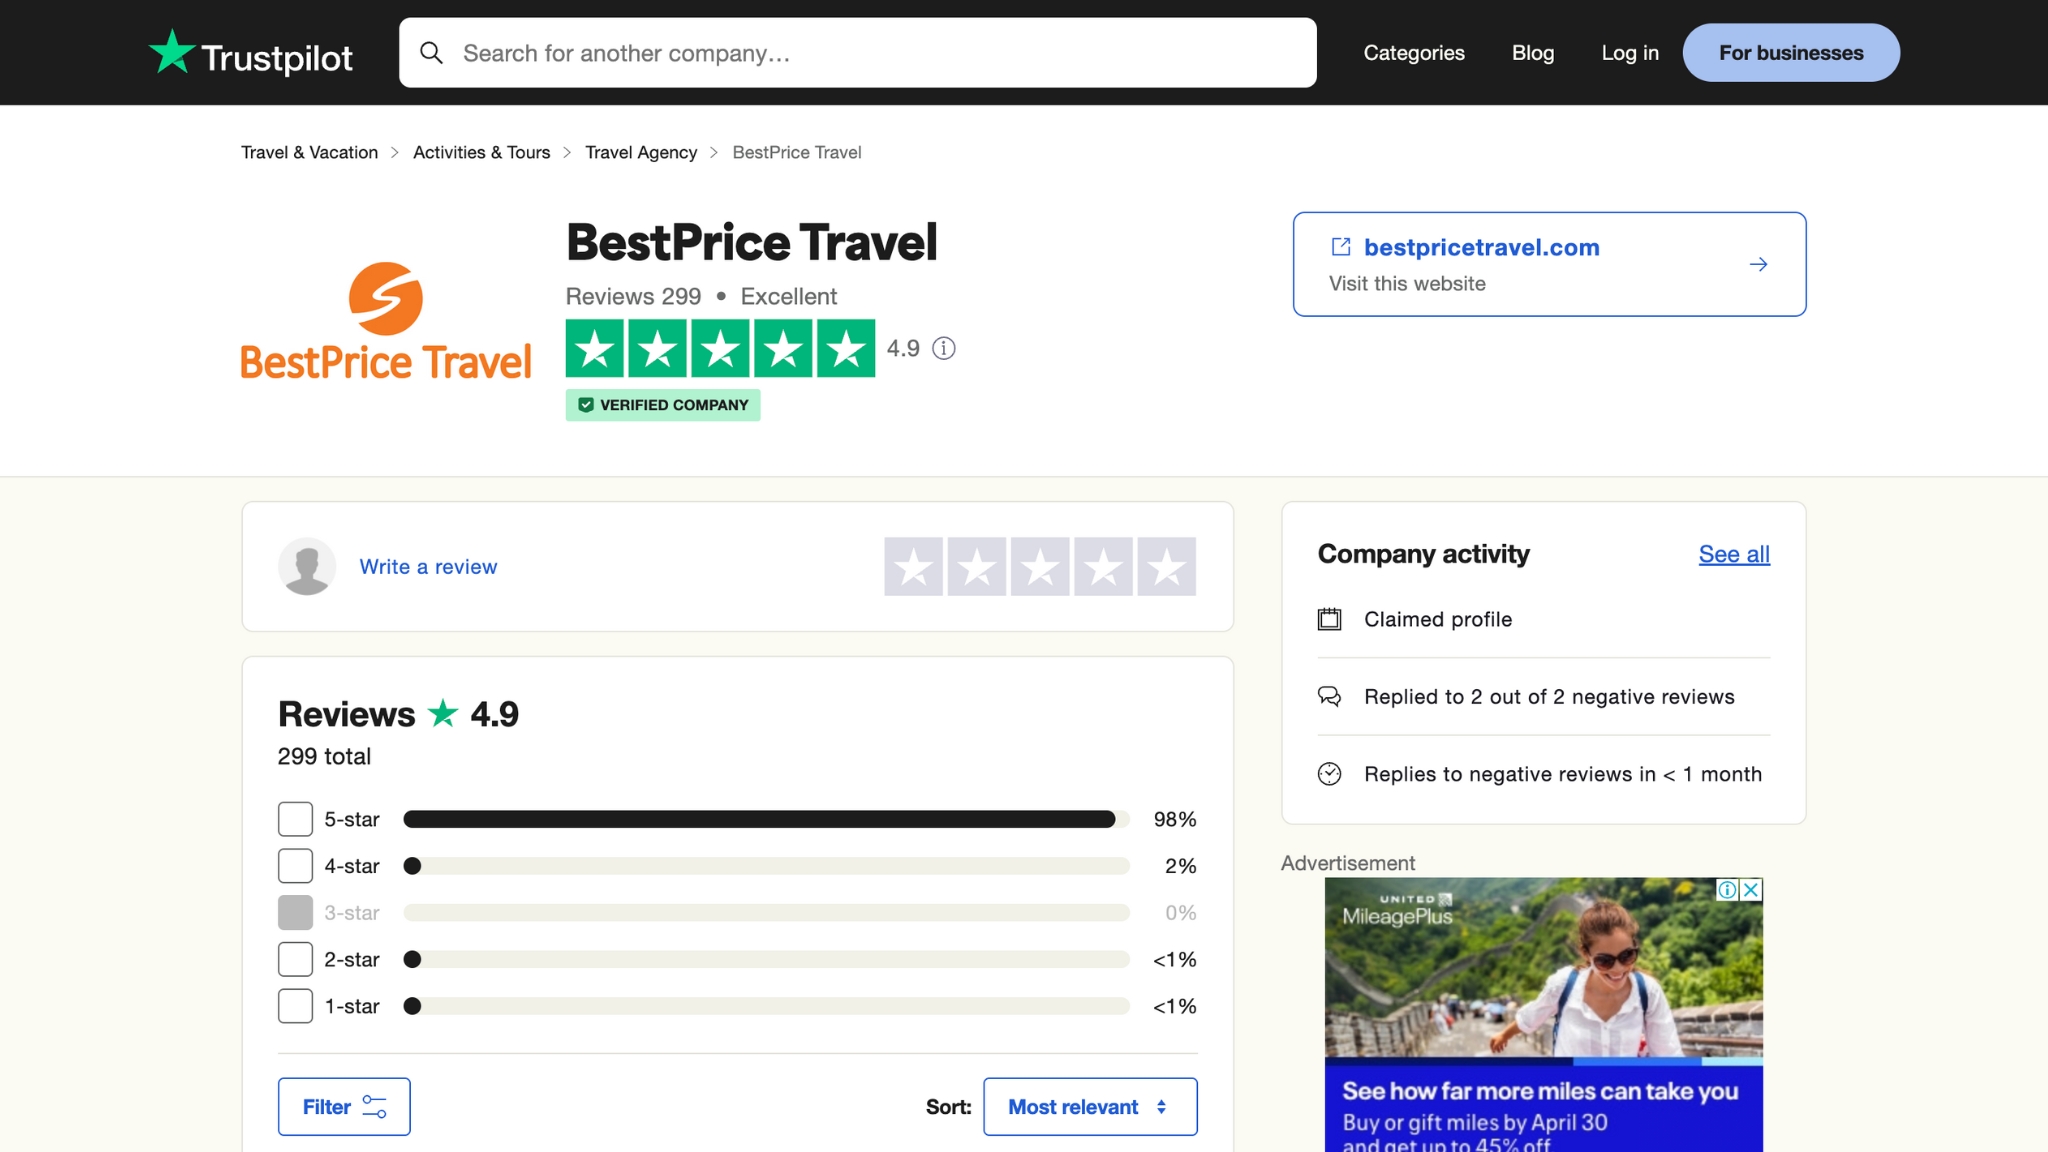 BestPrice Travel on Trustpilot